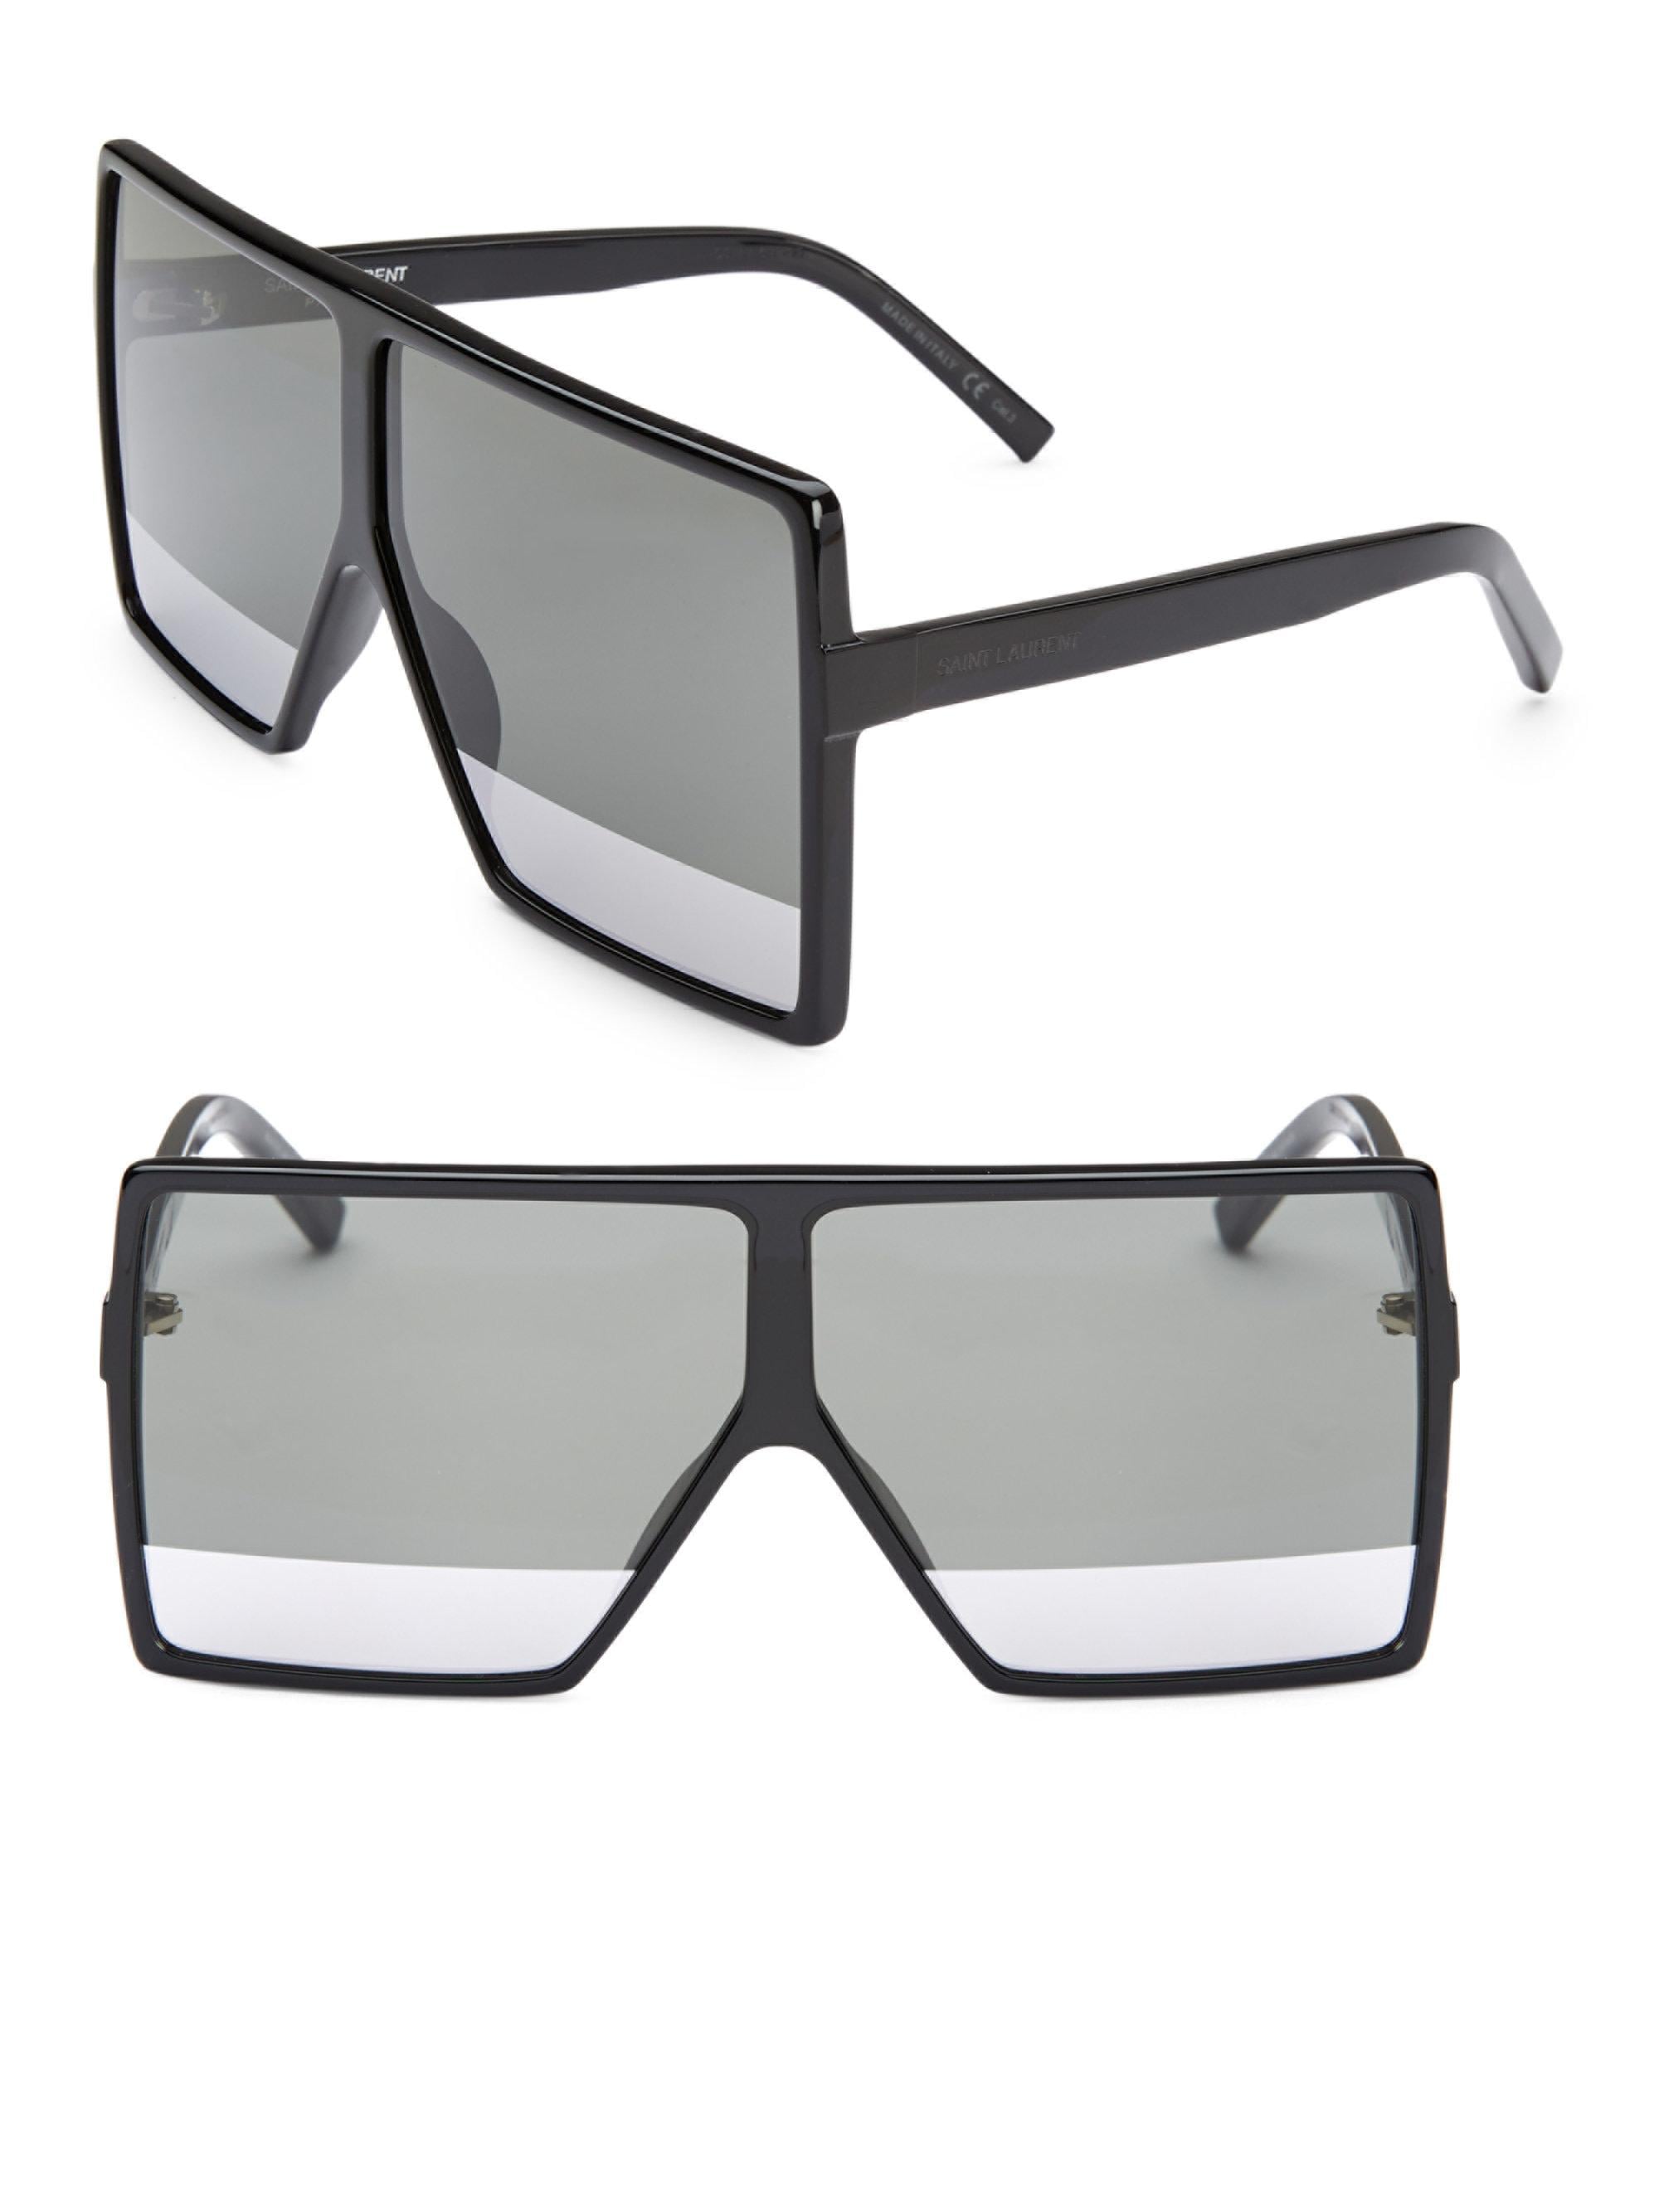 Saint Laurent Black Betty Sunglasses - 001 | Editorialist